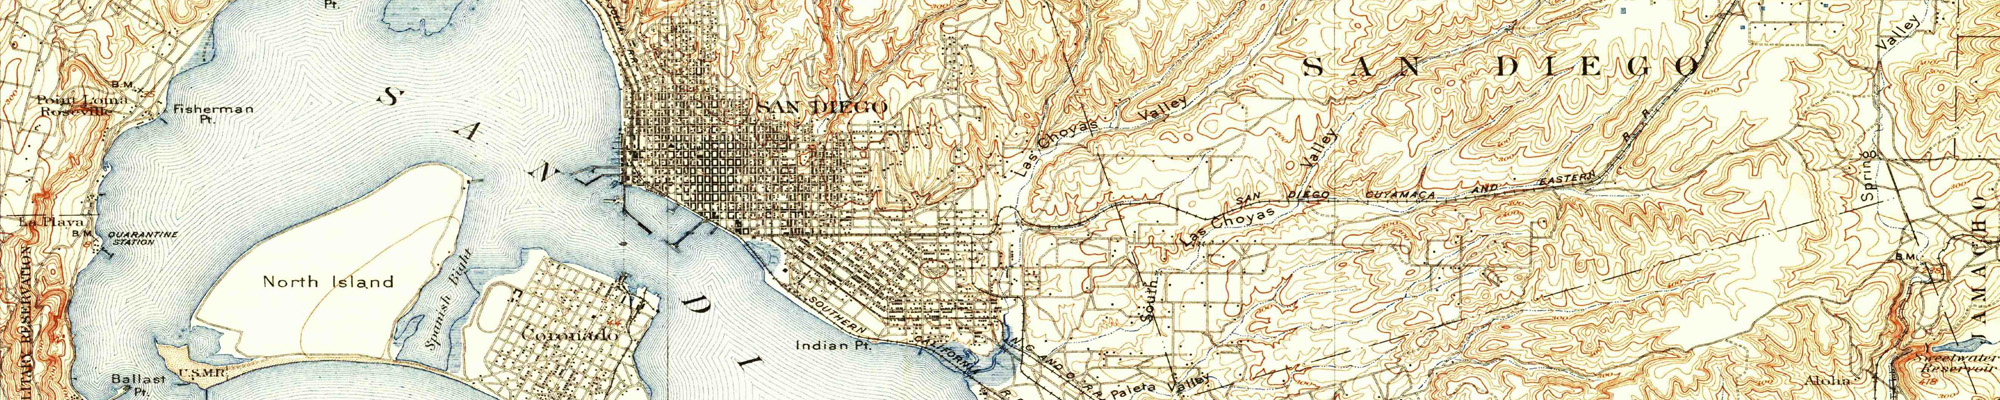 segment of historic map of San Diego 1904